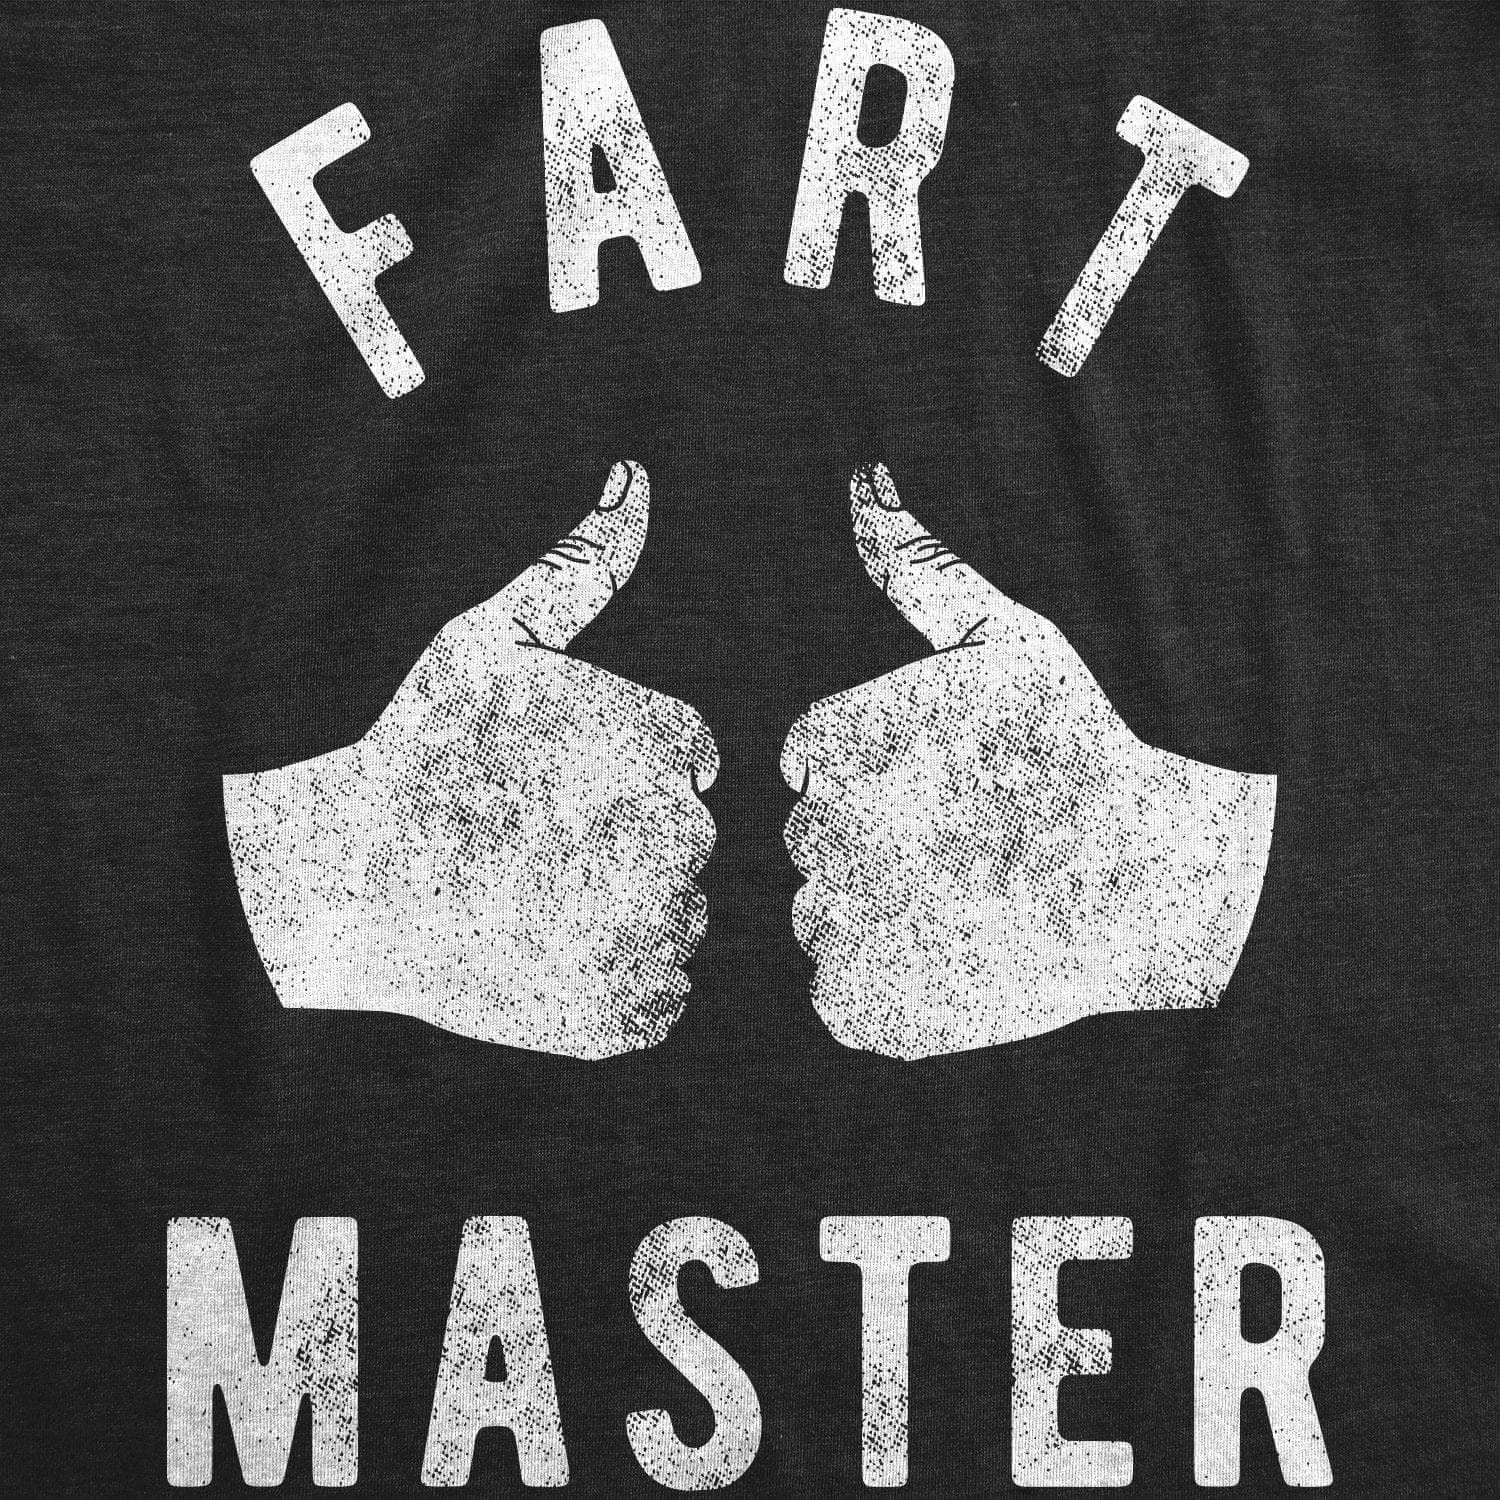 Fart Master Men's Tshirt  -  Crazy Dog T-Shirts